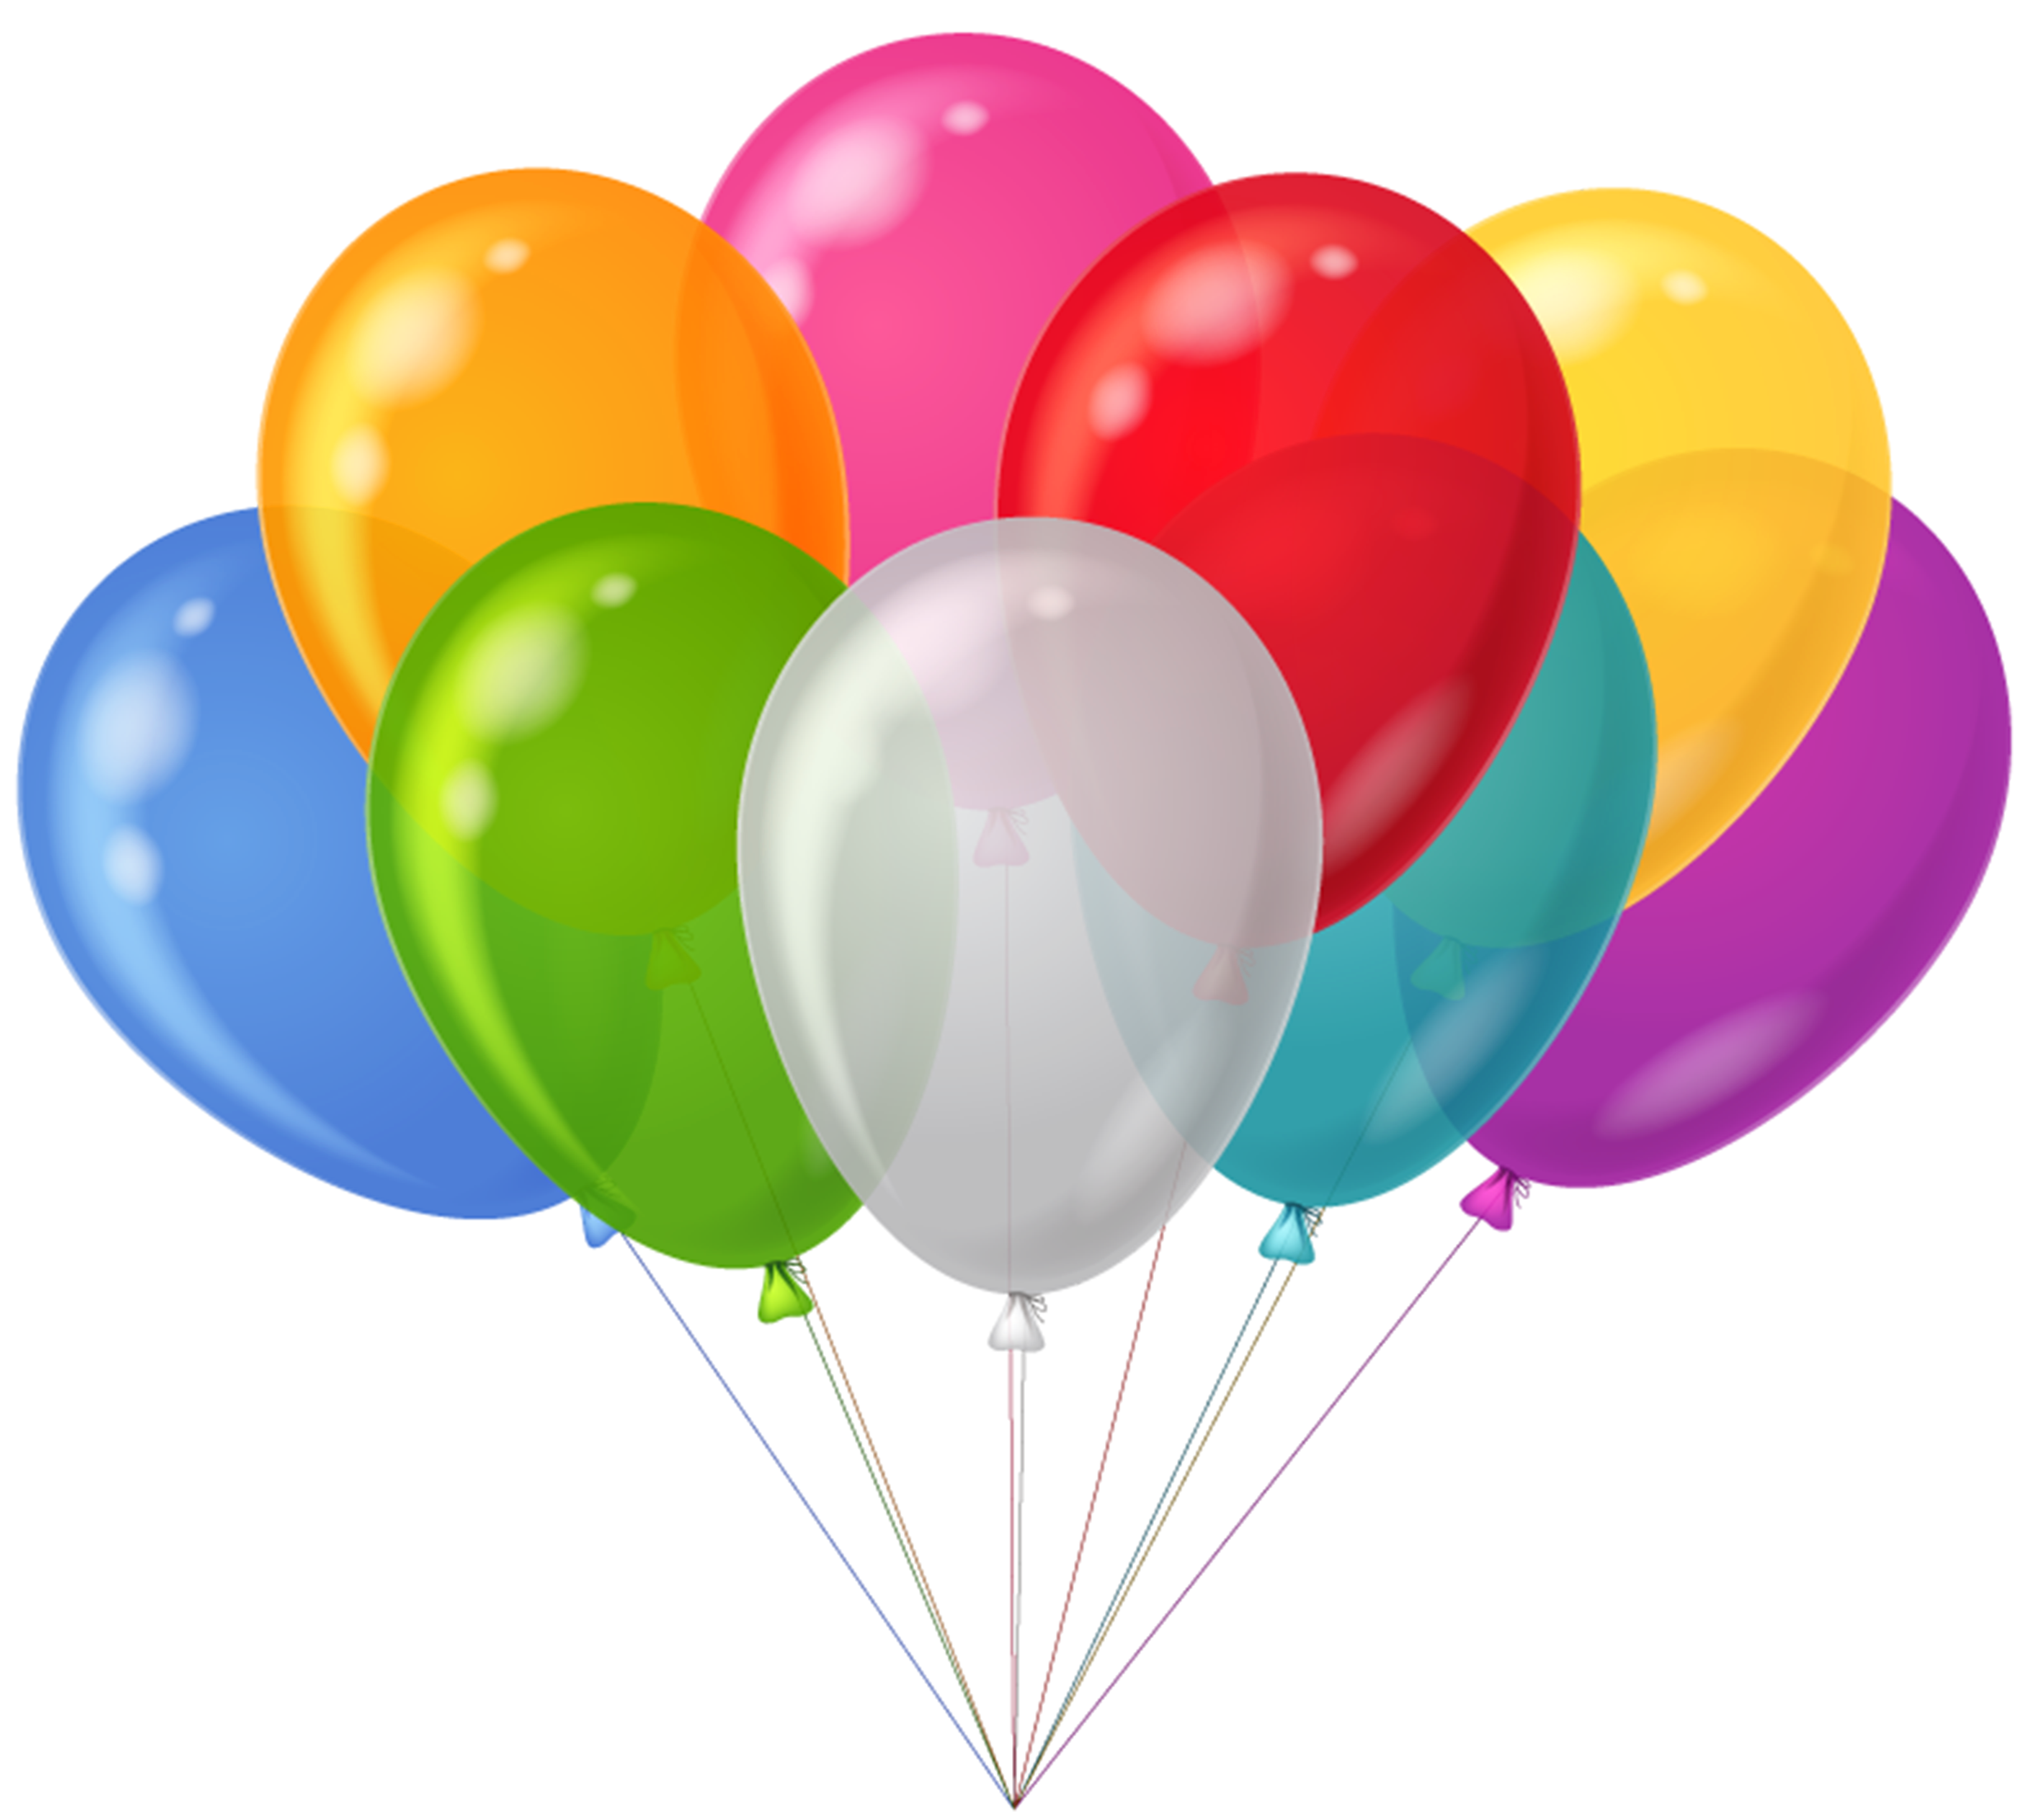 Free Birthday Balloon Clip Art | Clipart Panda - Free Clipart Images